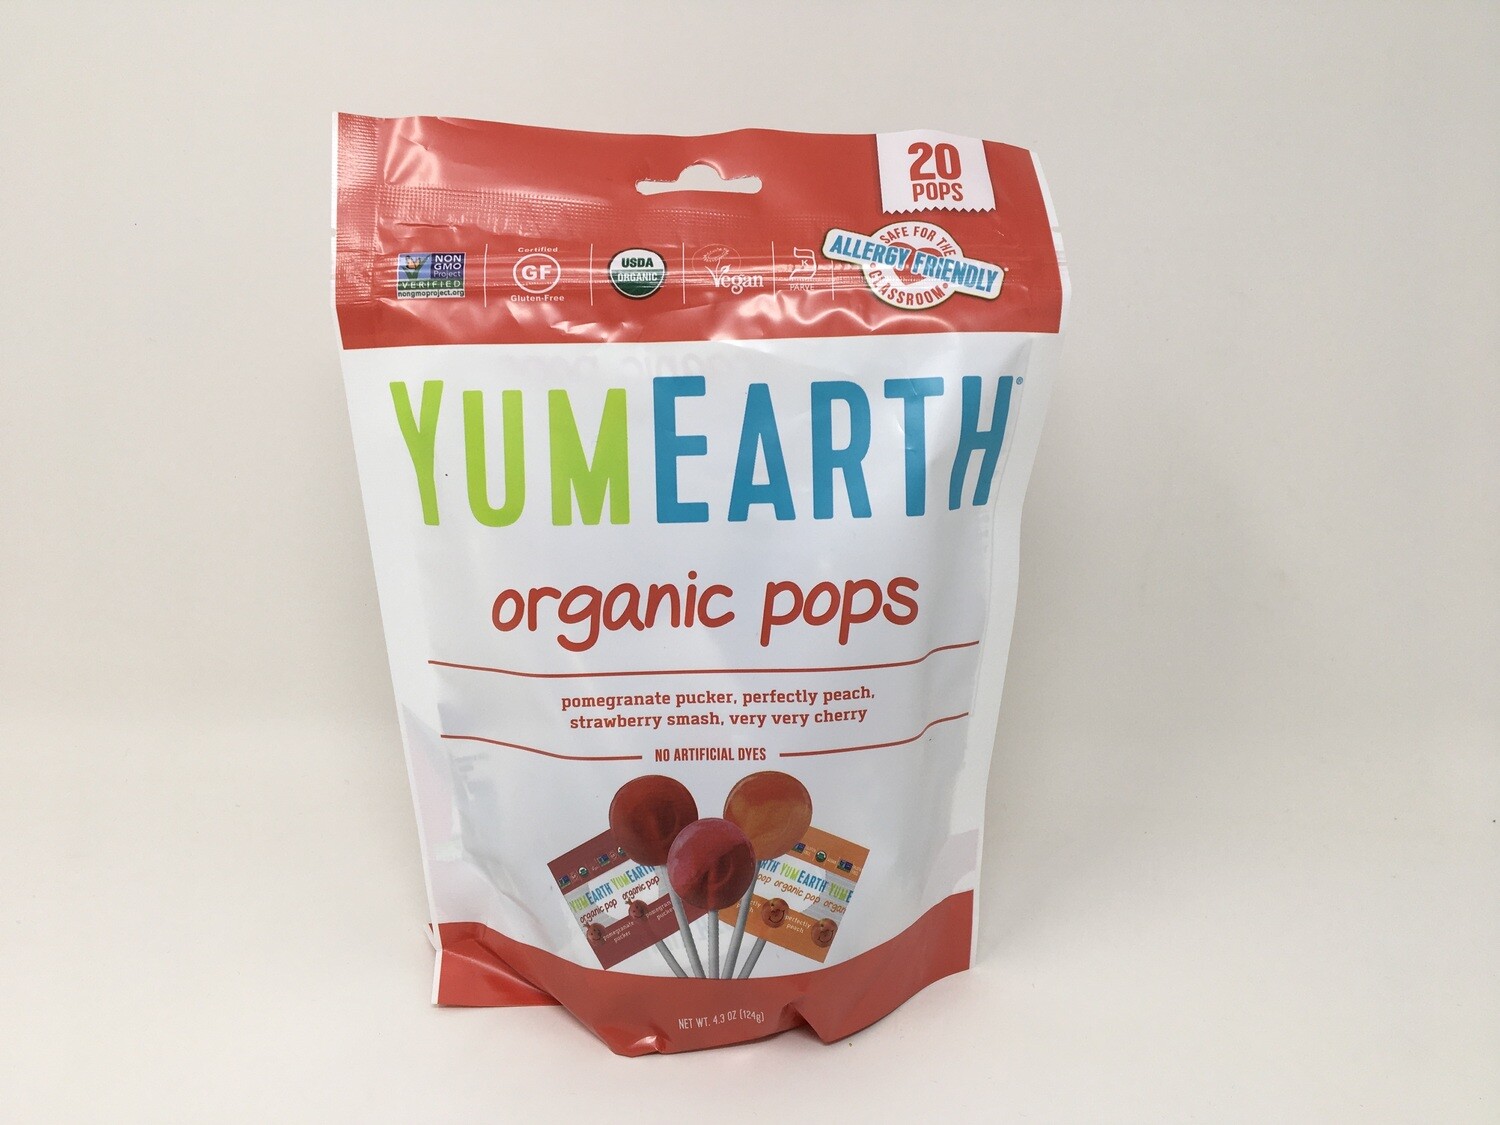 Yum Earth Organic Pops 20CT (Yum Earth)